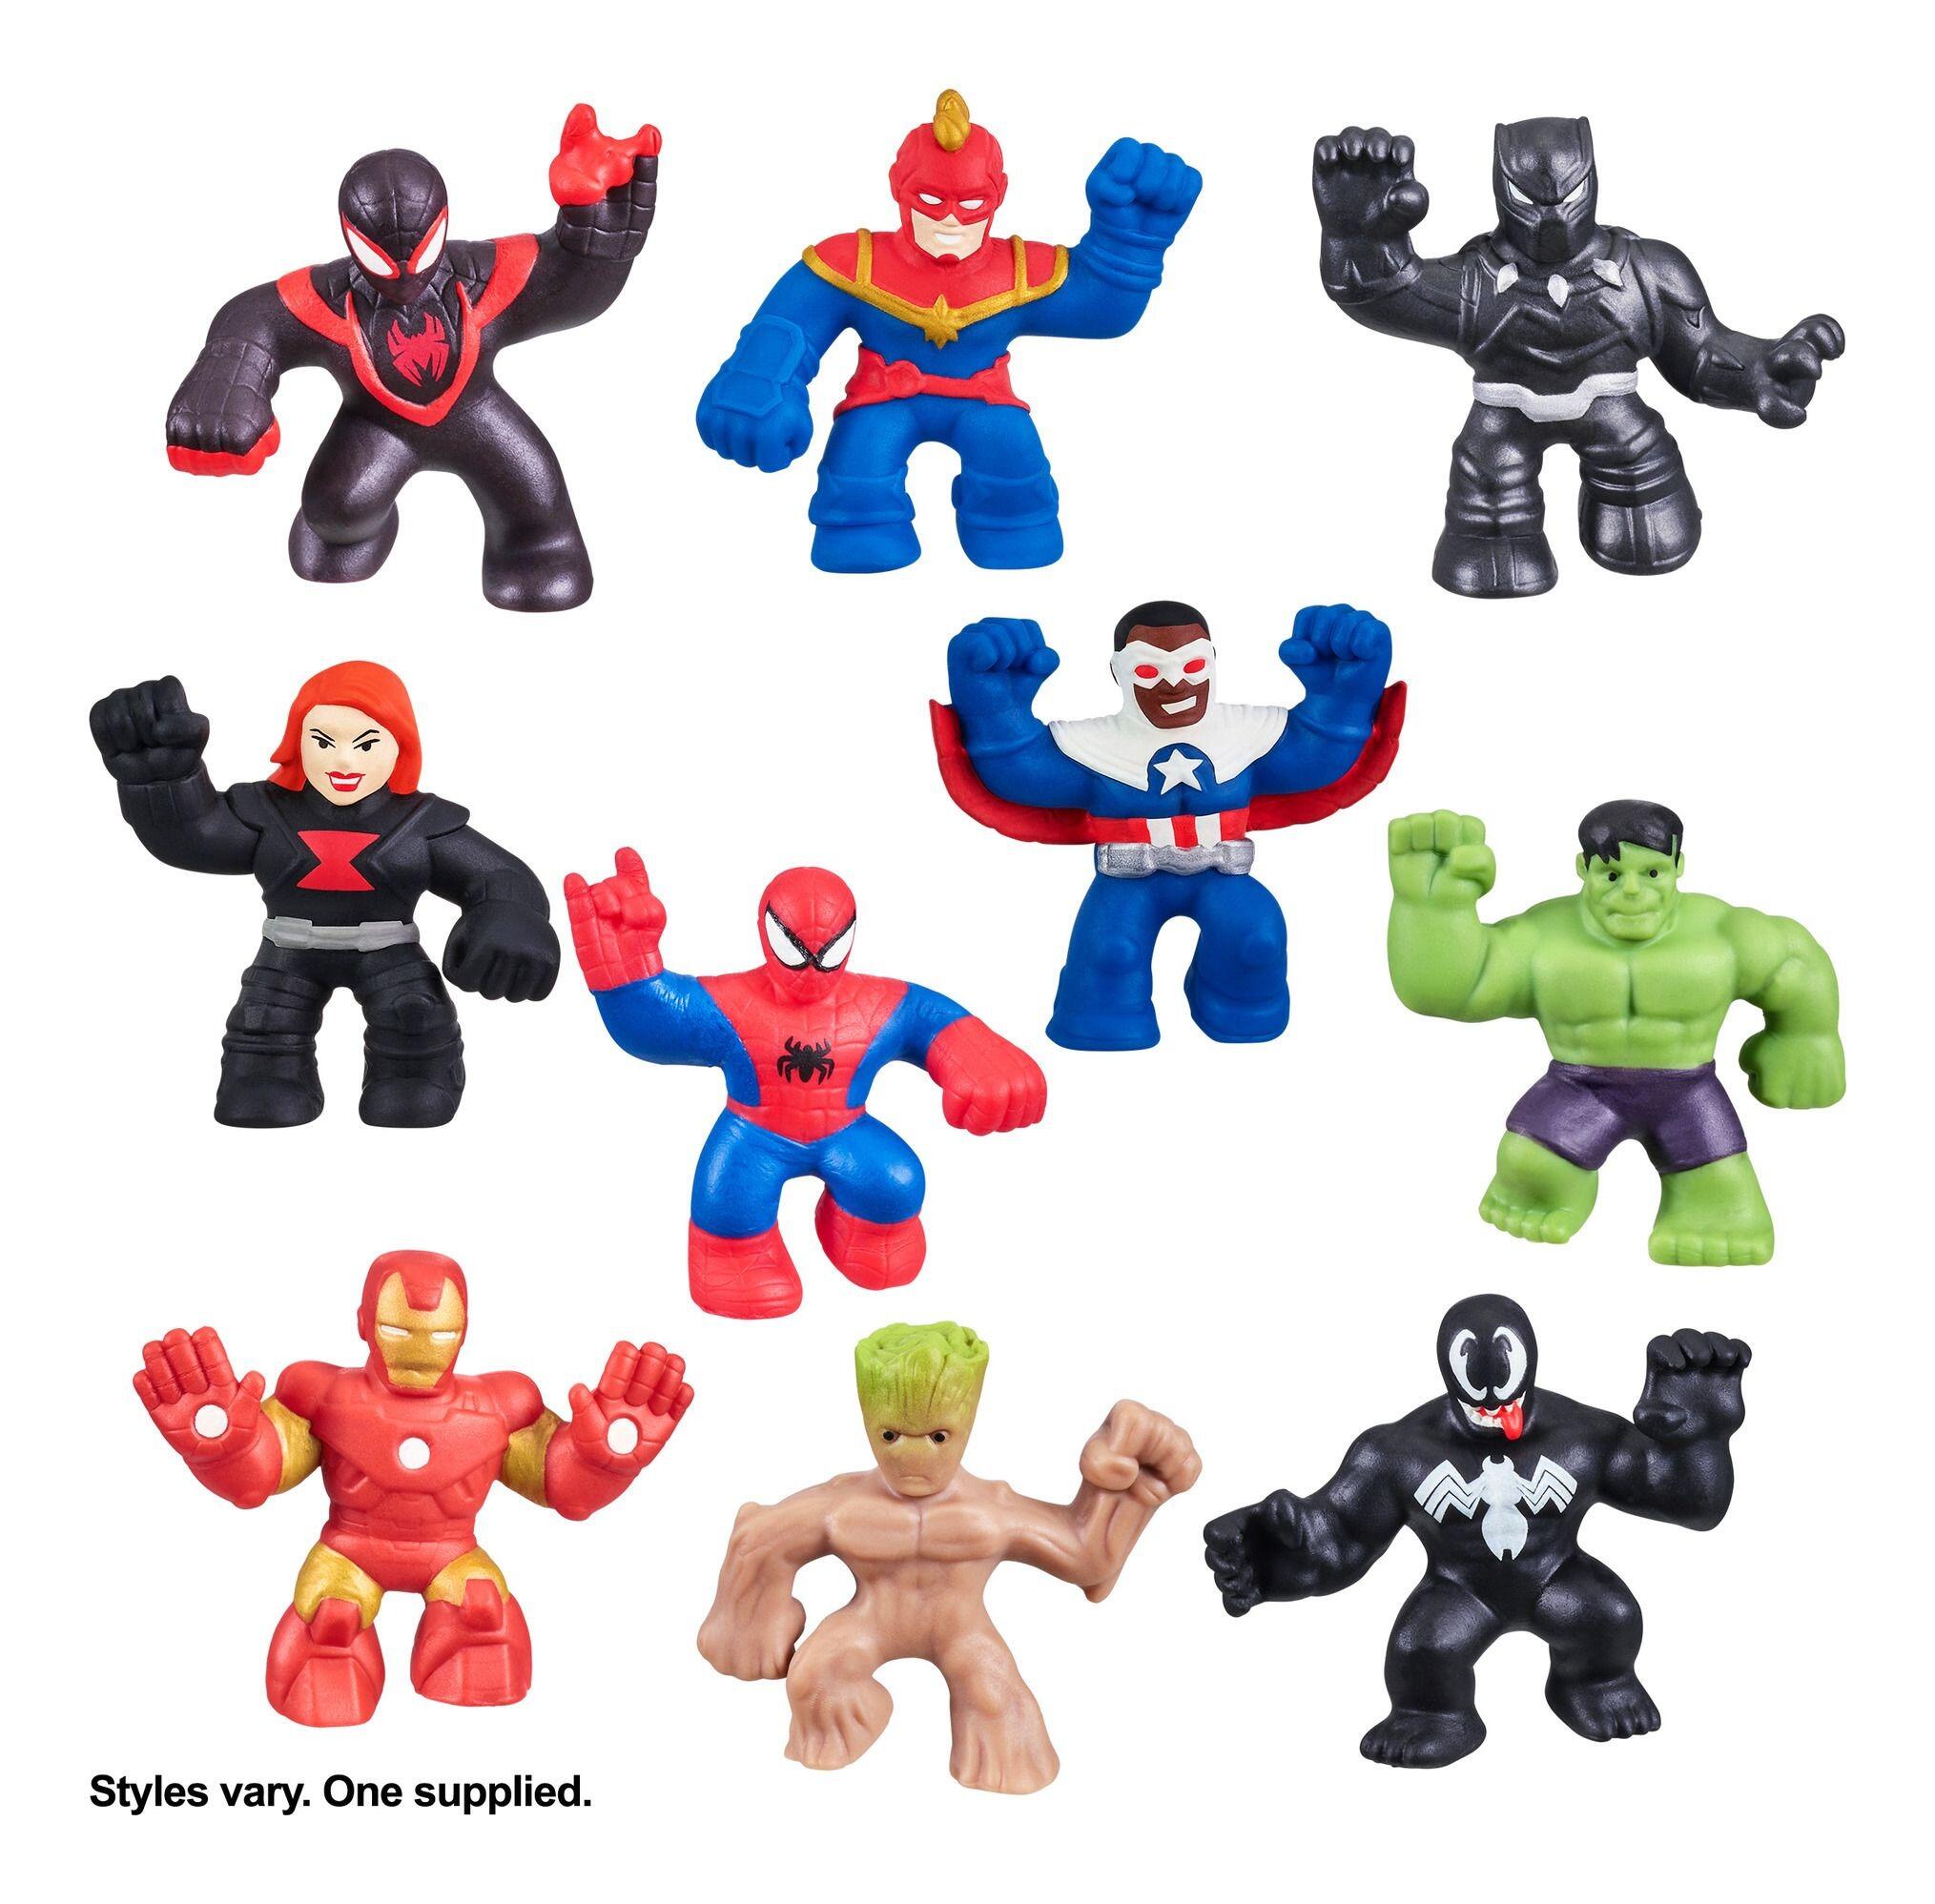 Heroes of Goo Jit Zu Marvel Minis Assorted